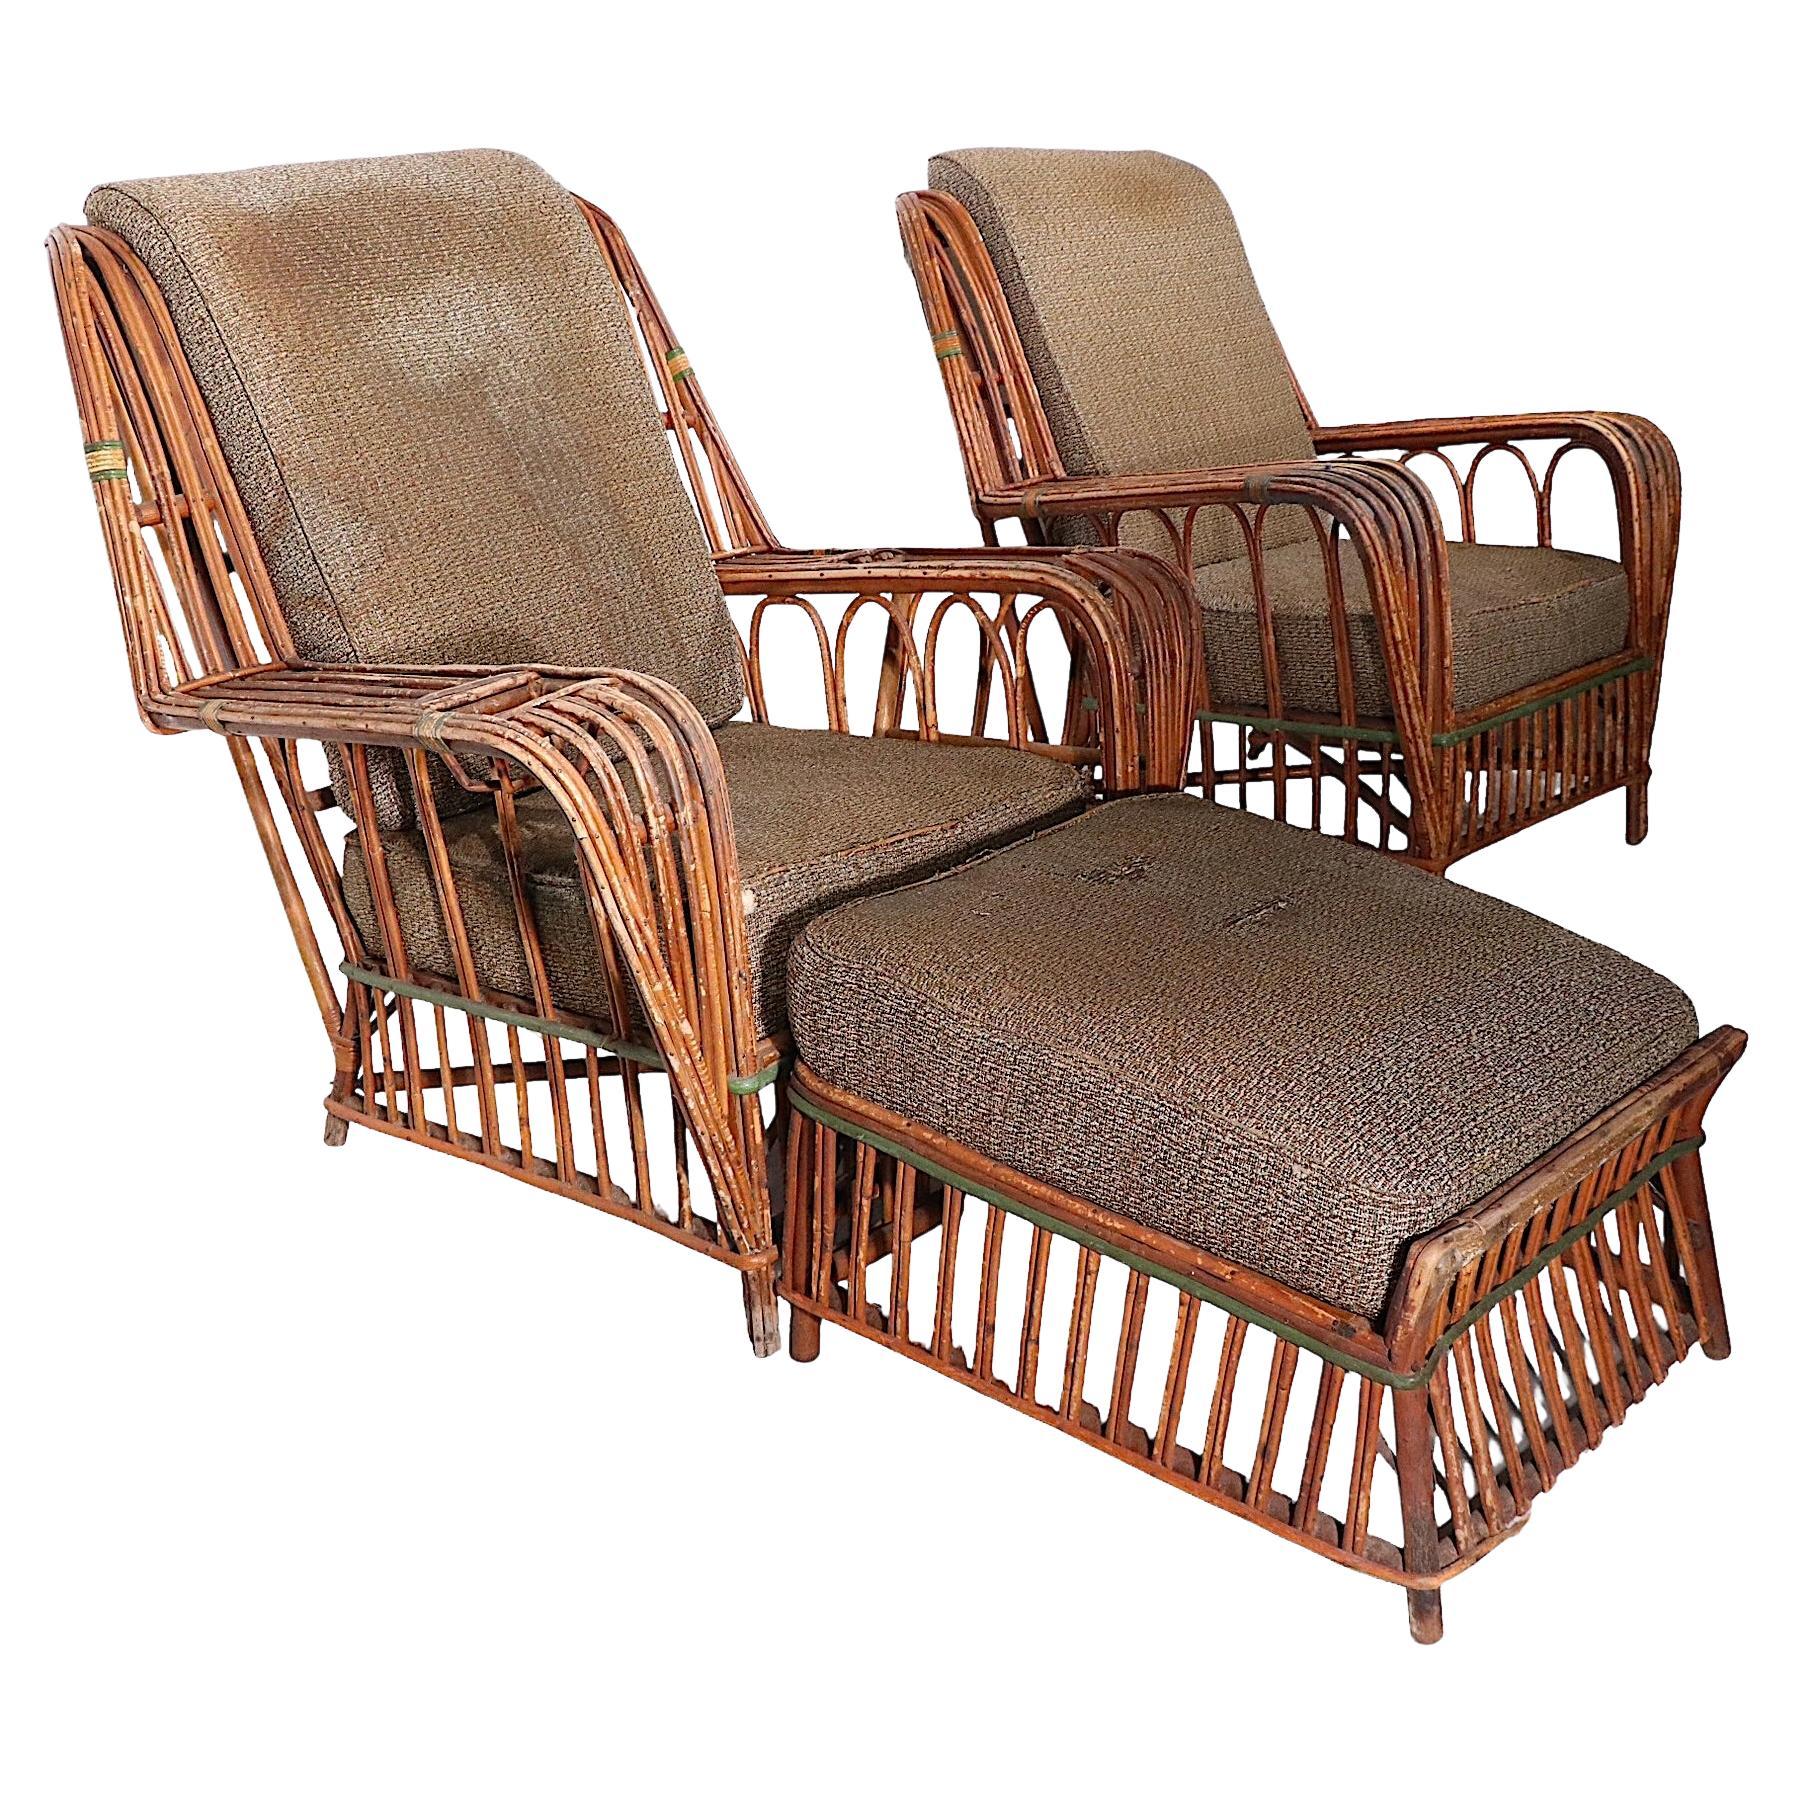 3 Pc Set Art Deco Split Reed Chairs and Ottoman, circa 1920-1930s